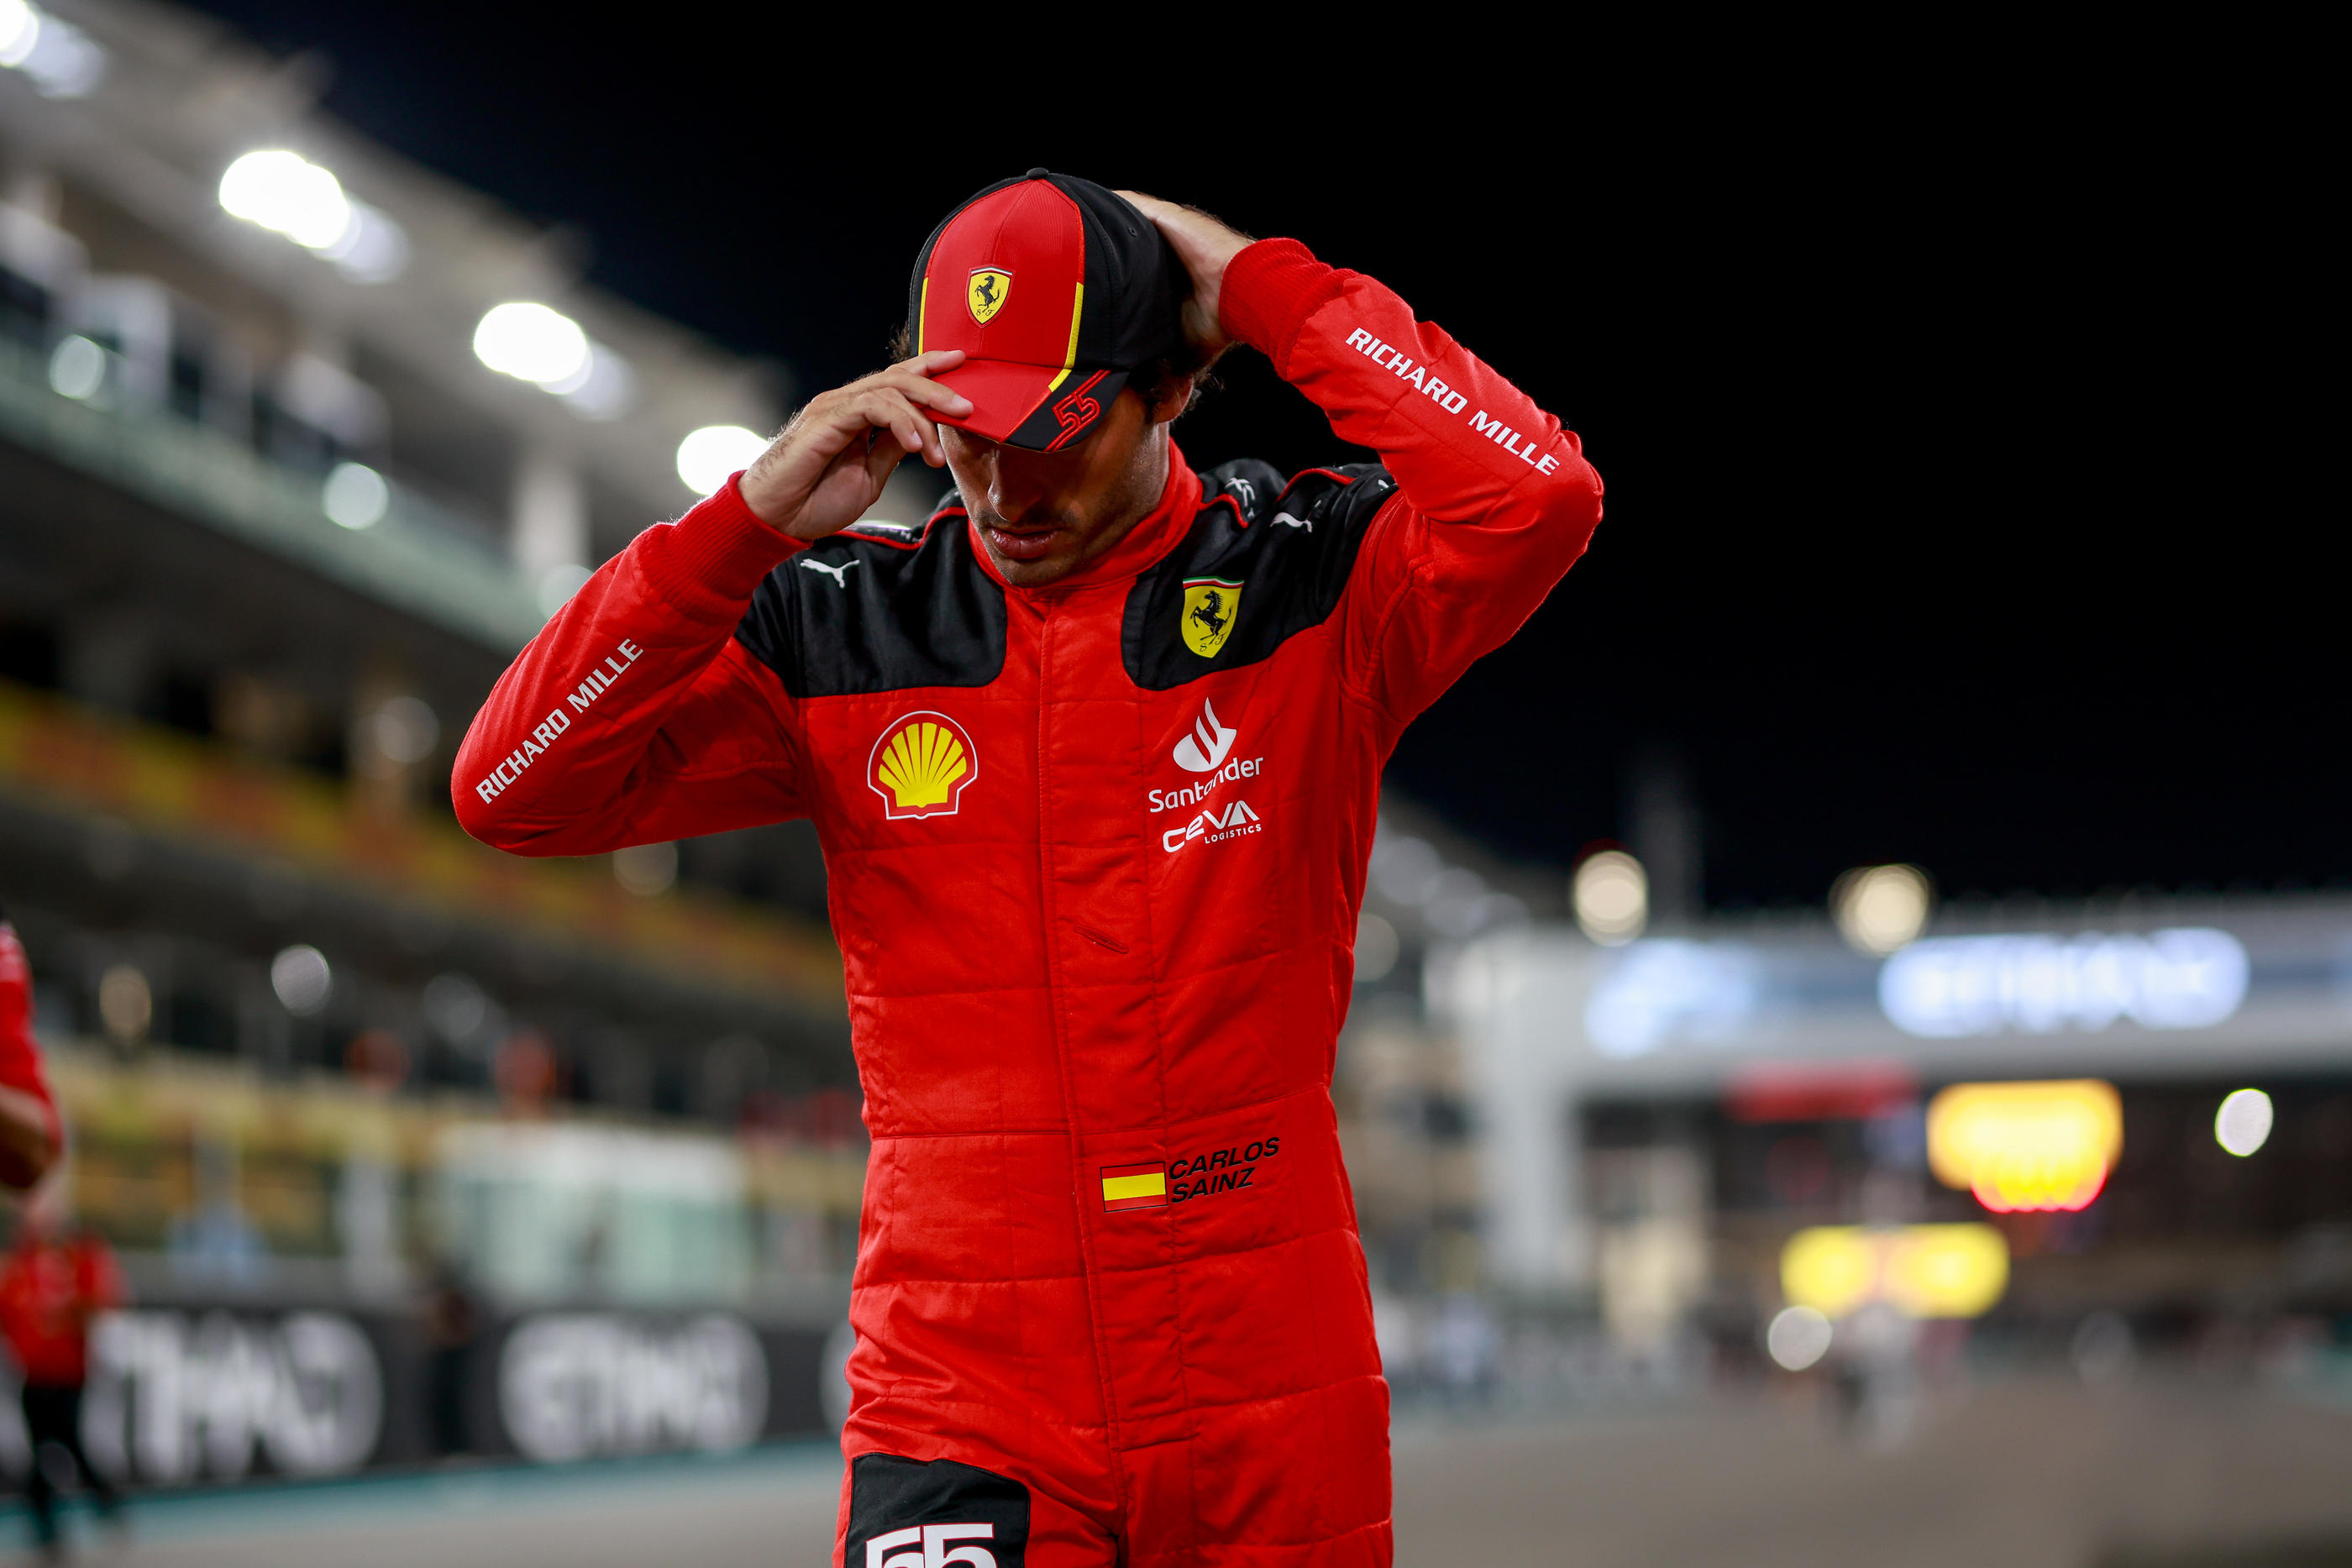 Casquette de pilote Carlos Sainz 2023 - Scuderia Ferrari F1